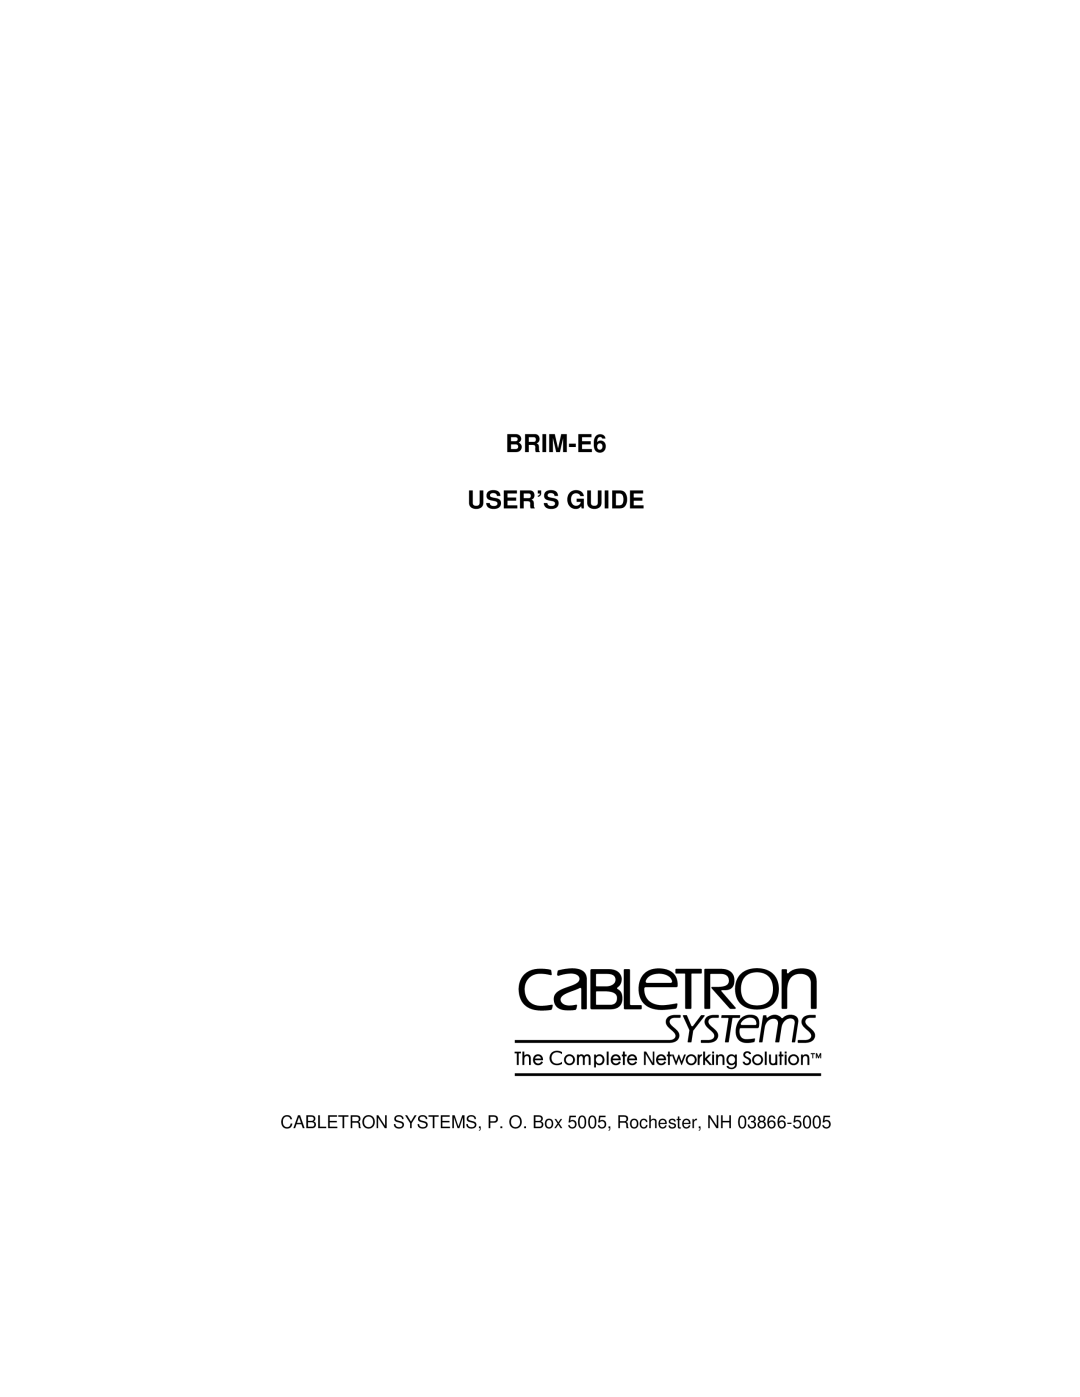 Enterasys Networks manual BRIM-E6 USER’S Guide, Cabletron SYSTEMS, P. O. Box 5005, Rochester, NH 